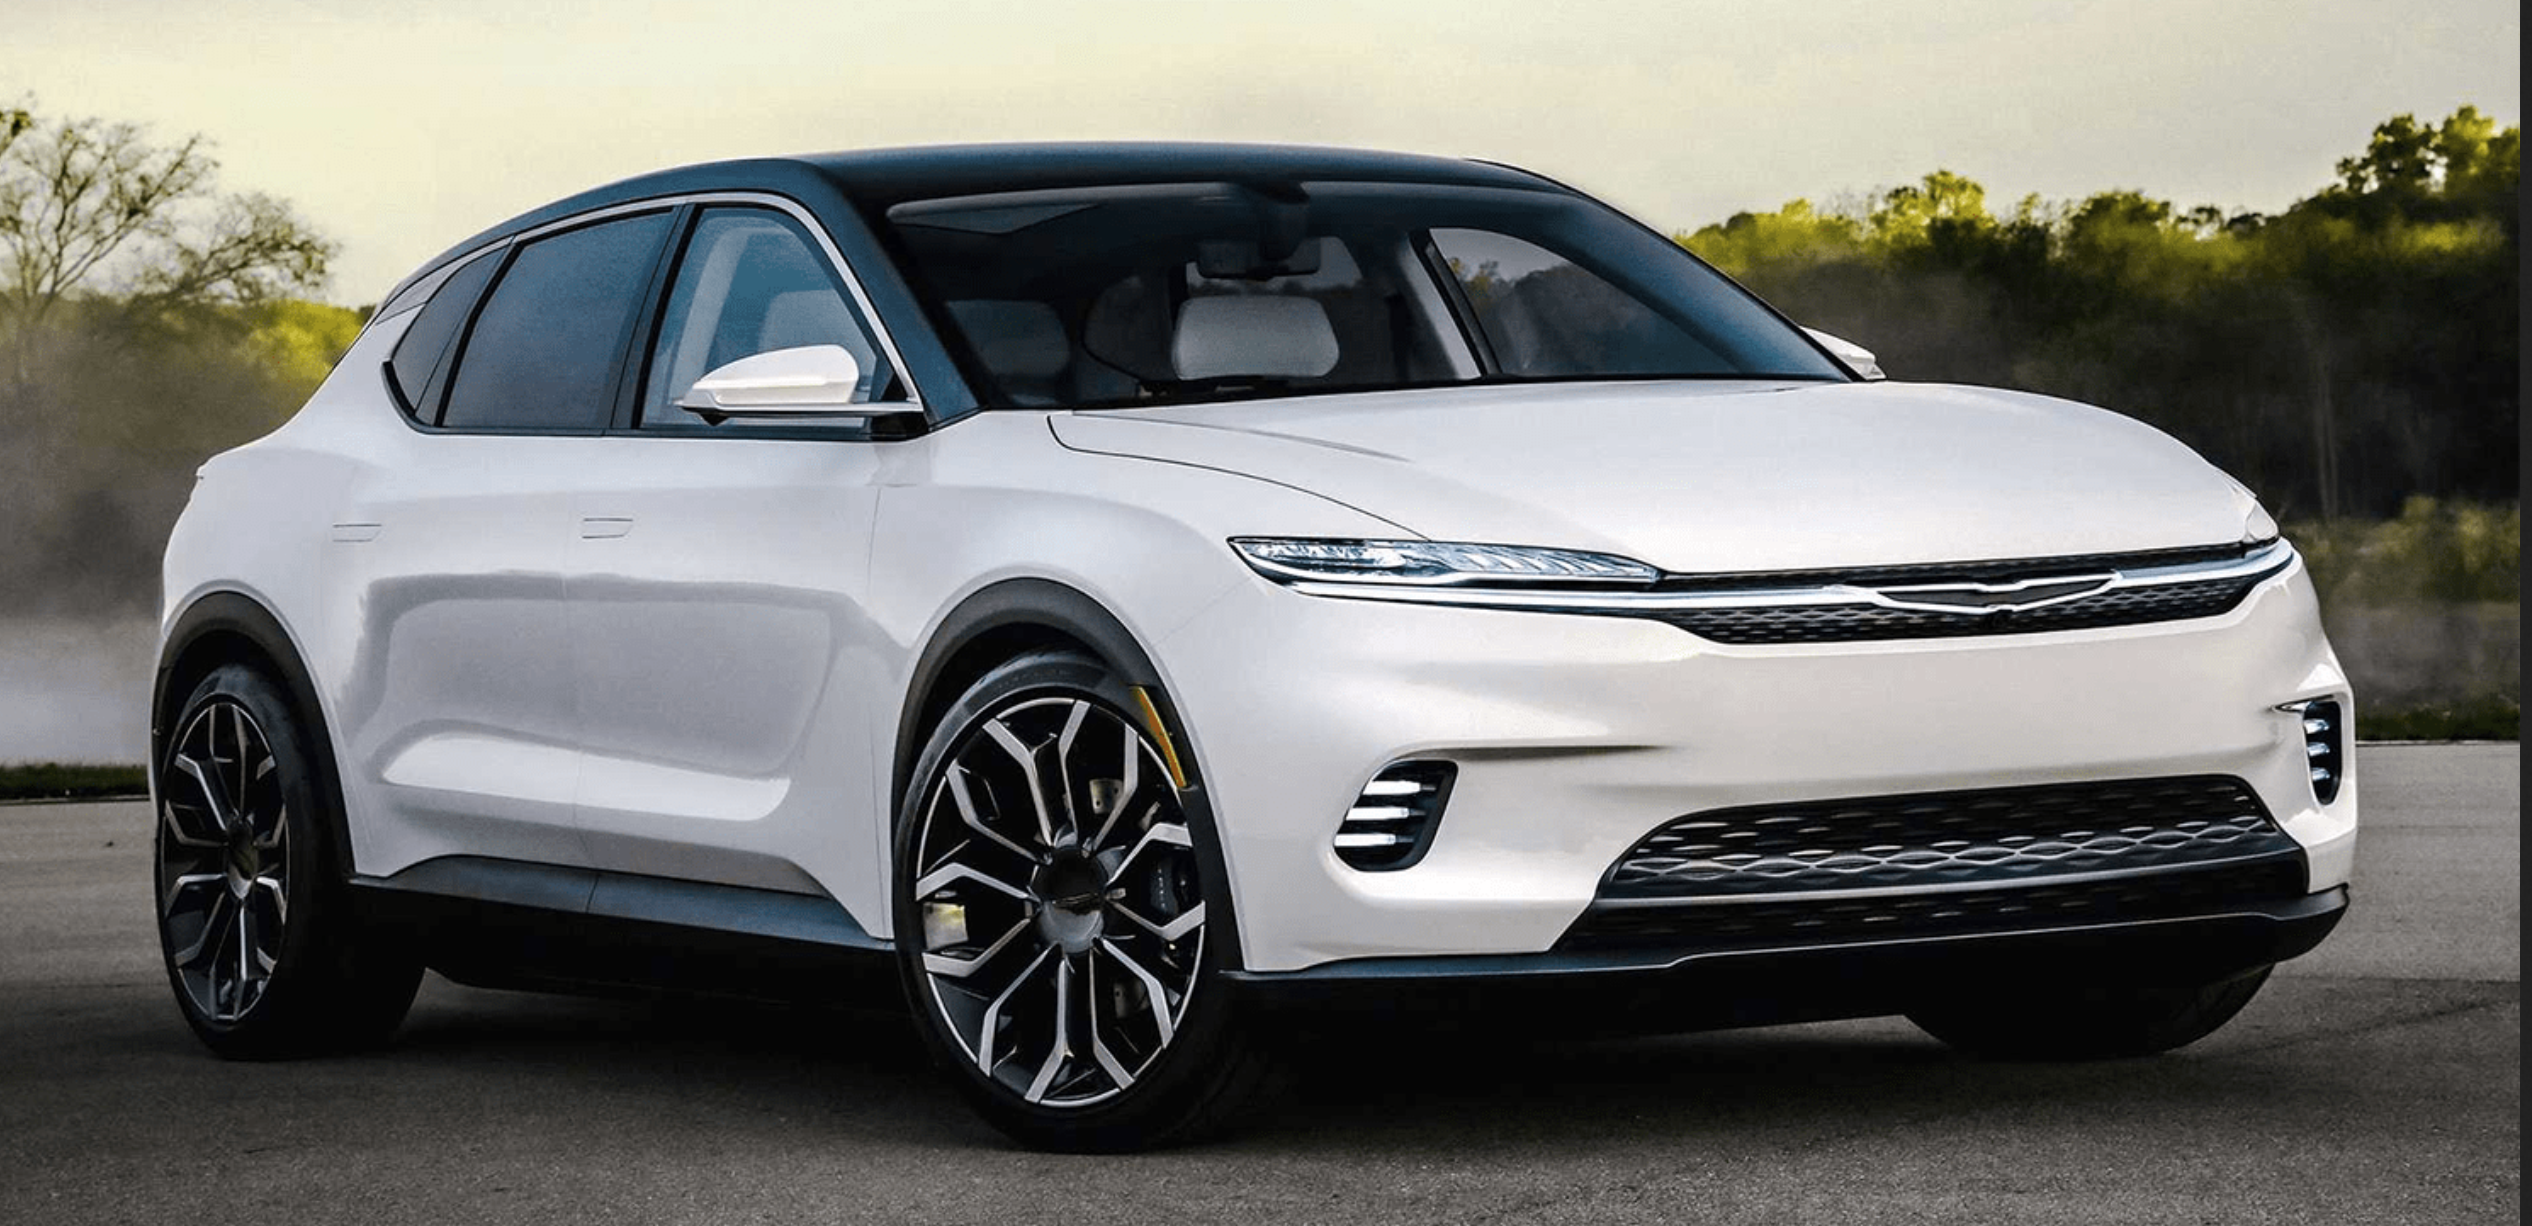 Chrysler Airflow announces full-electric range in 2028